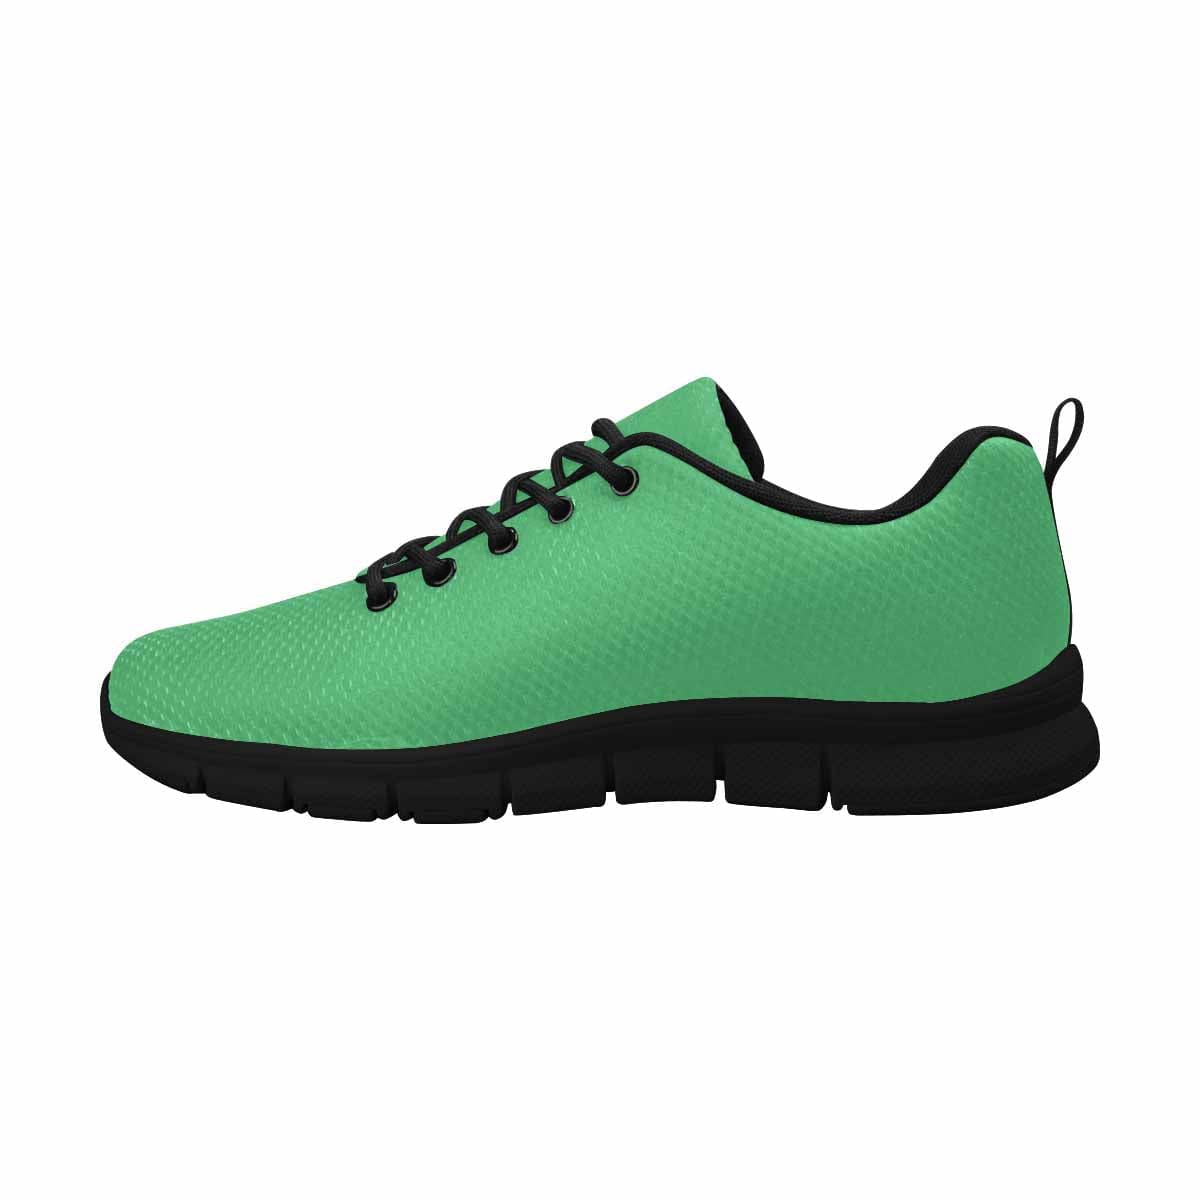 Sneakers For Men Emerald Green - Running Shoes - Mens | Sneakers | Running